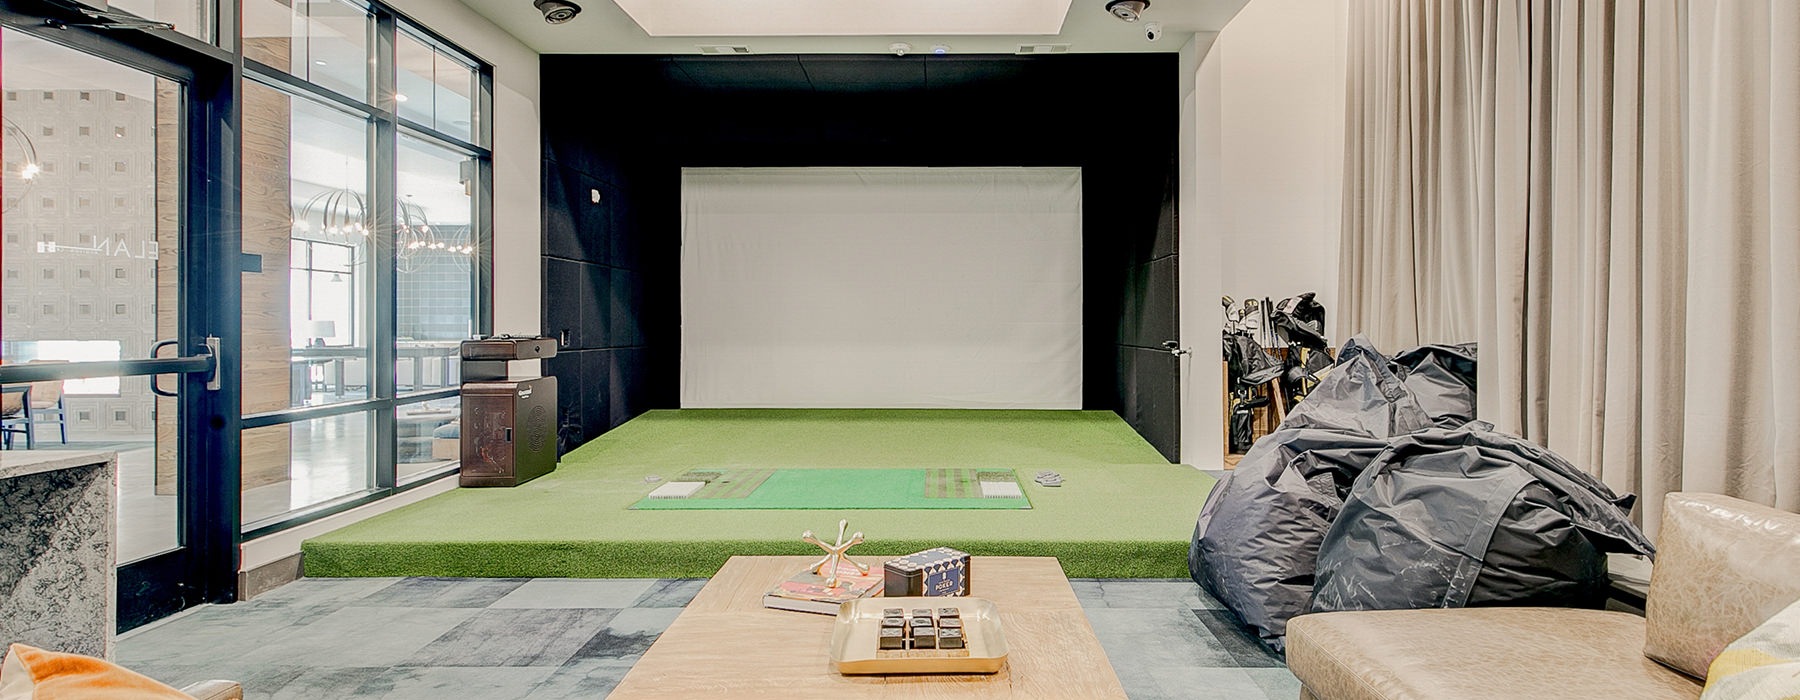 Large virtual golf simulator 